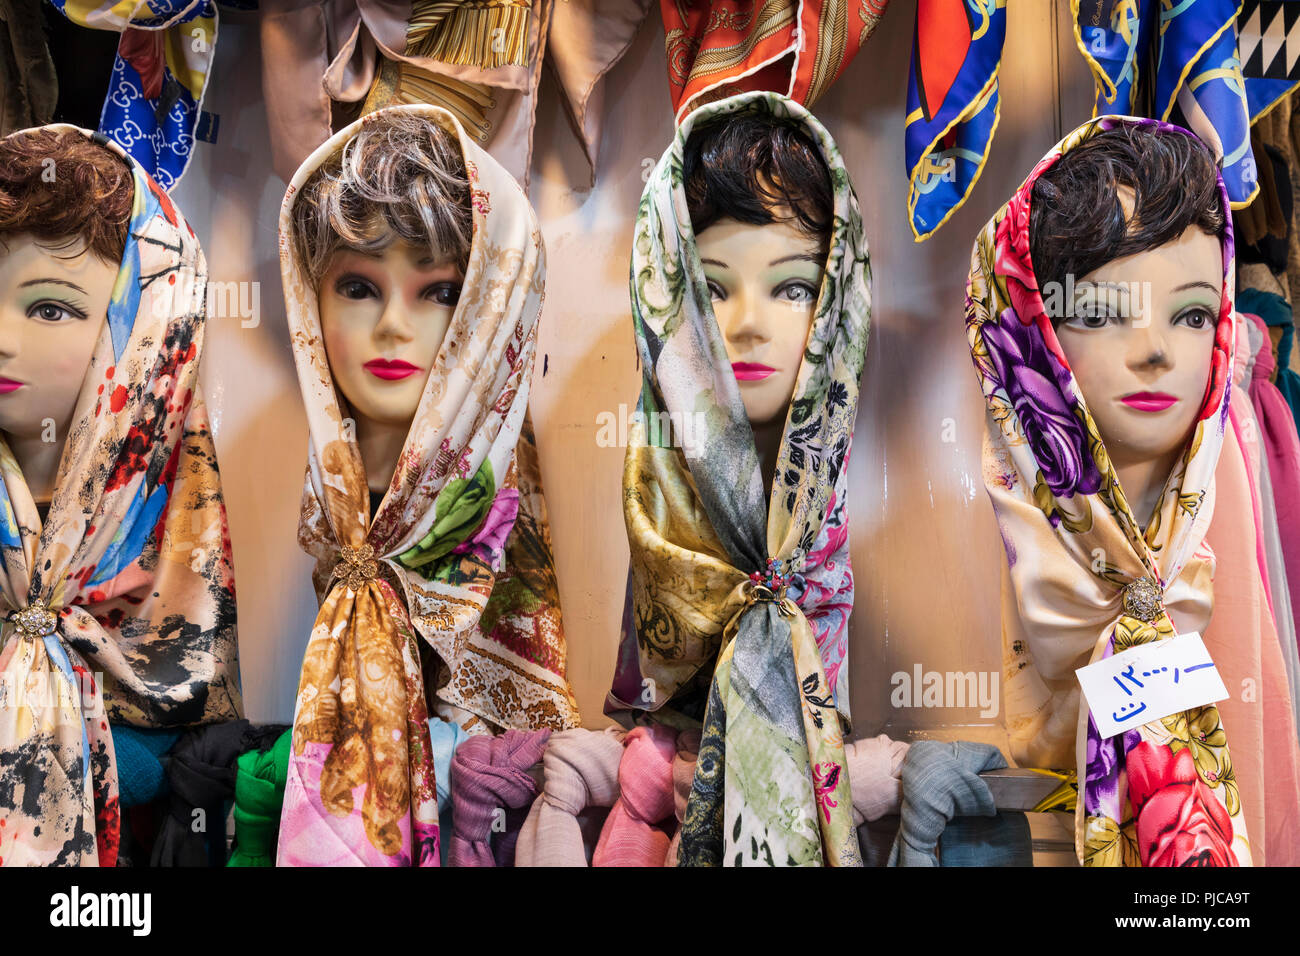 Islamic Republic of Iran. Bald Mannequin heads Stock Photo - Alamy